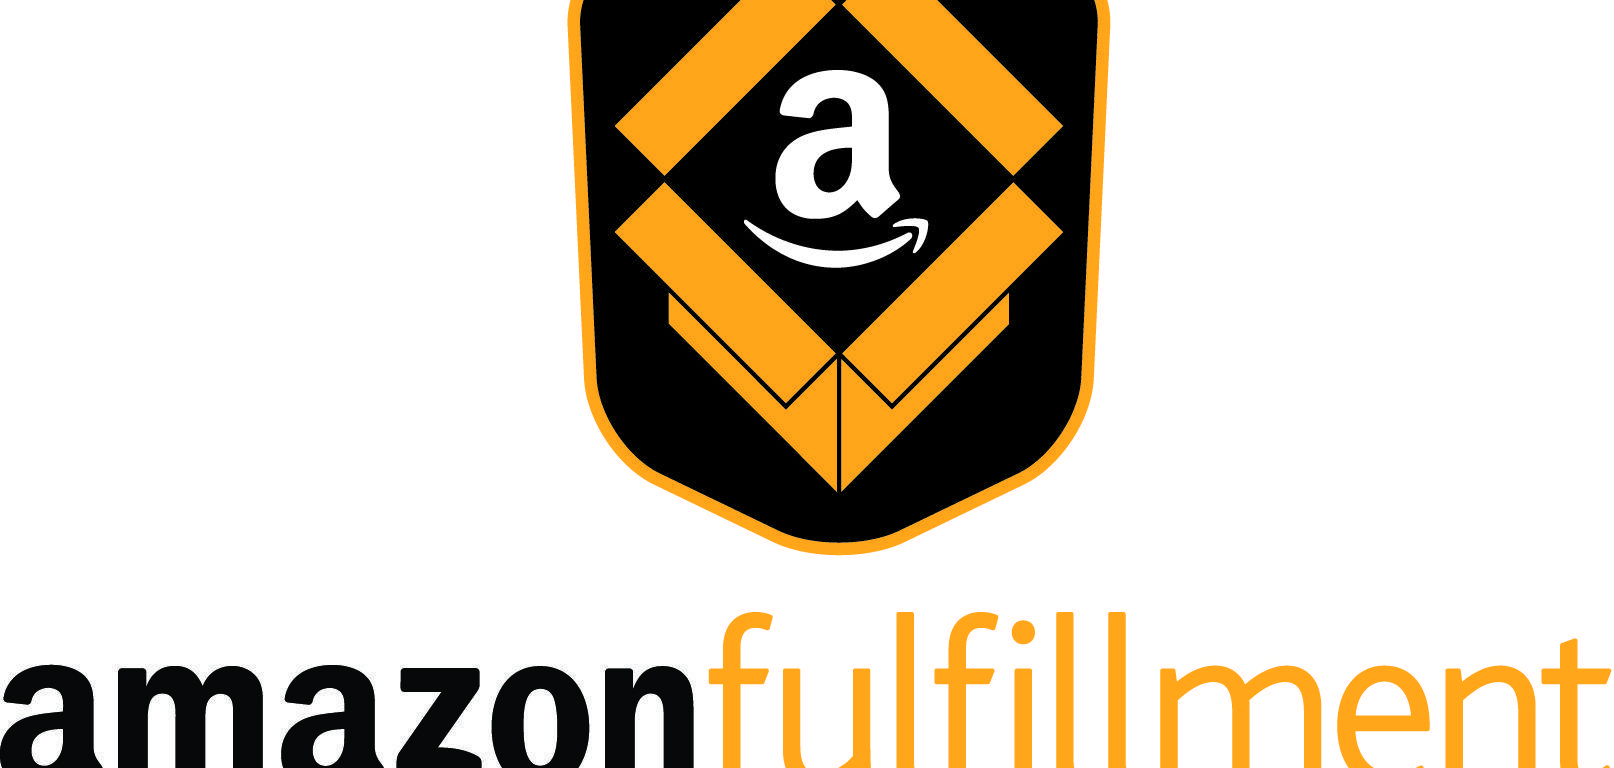 FBA Amazon Logo - Starting An Amazon FBA Business – The Full Breakdown